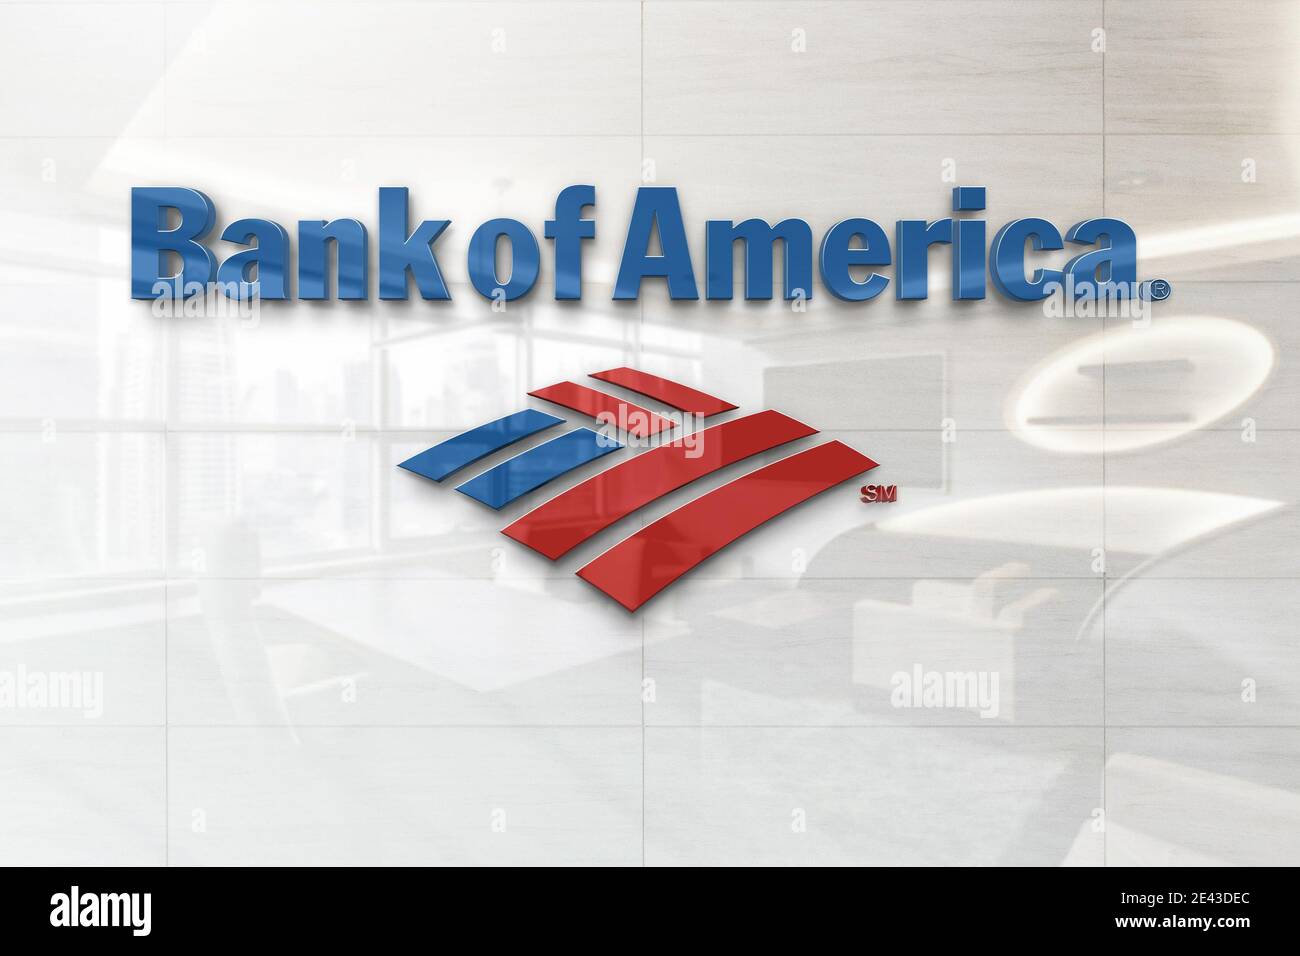 bank of america logo on glossy wall Stock Photo